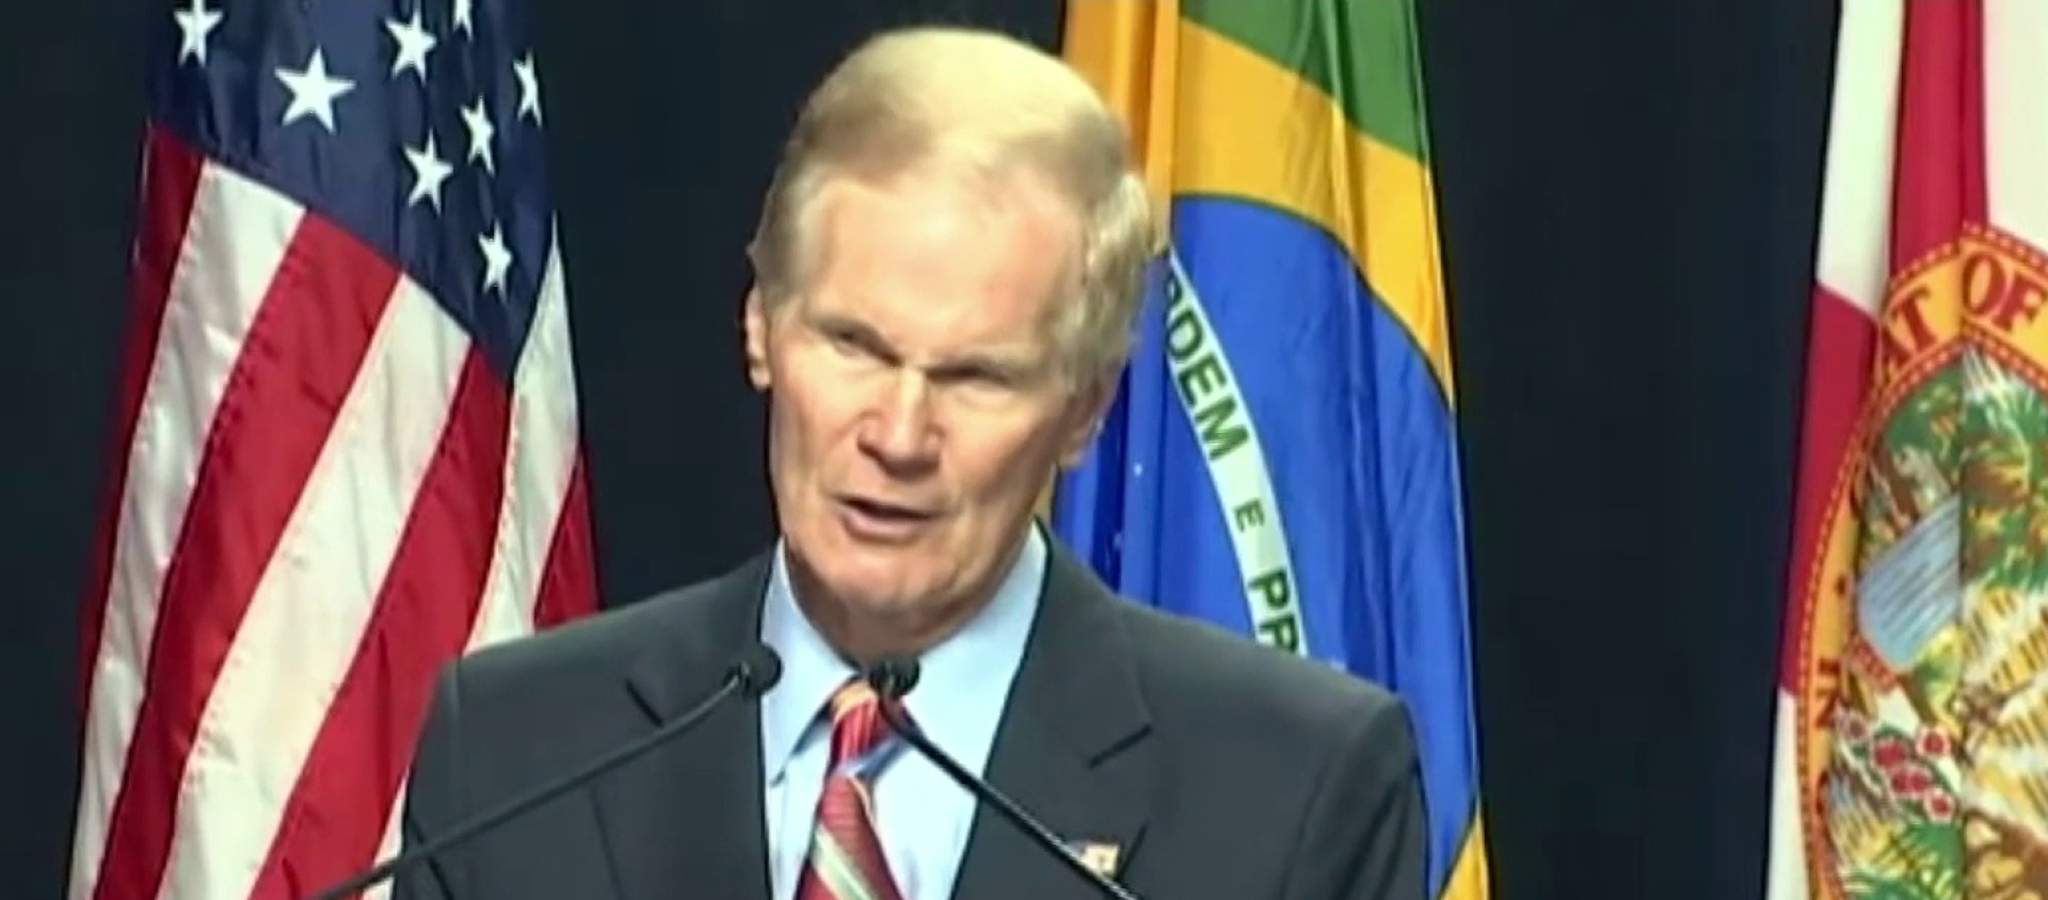 President Biden officially taps former Florida Sen. Bill Nelson to lead NASA